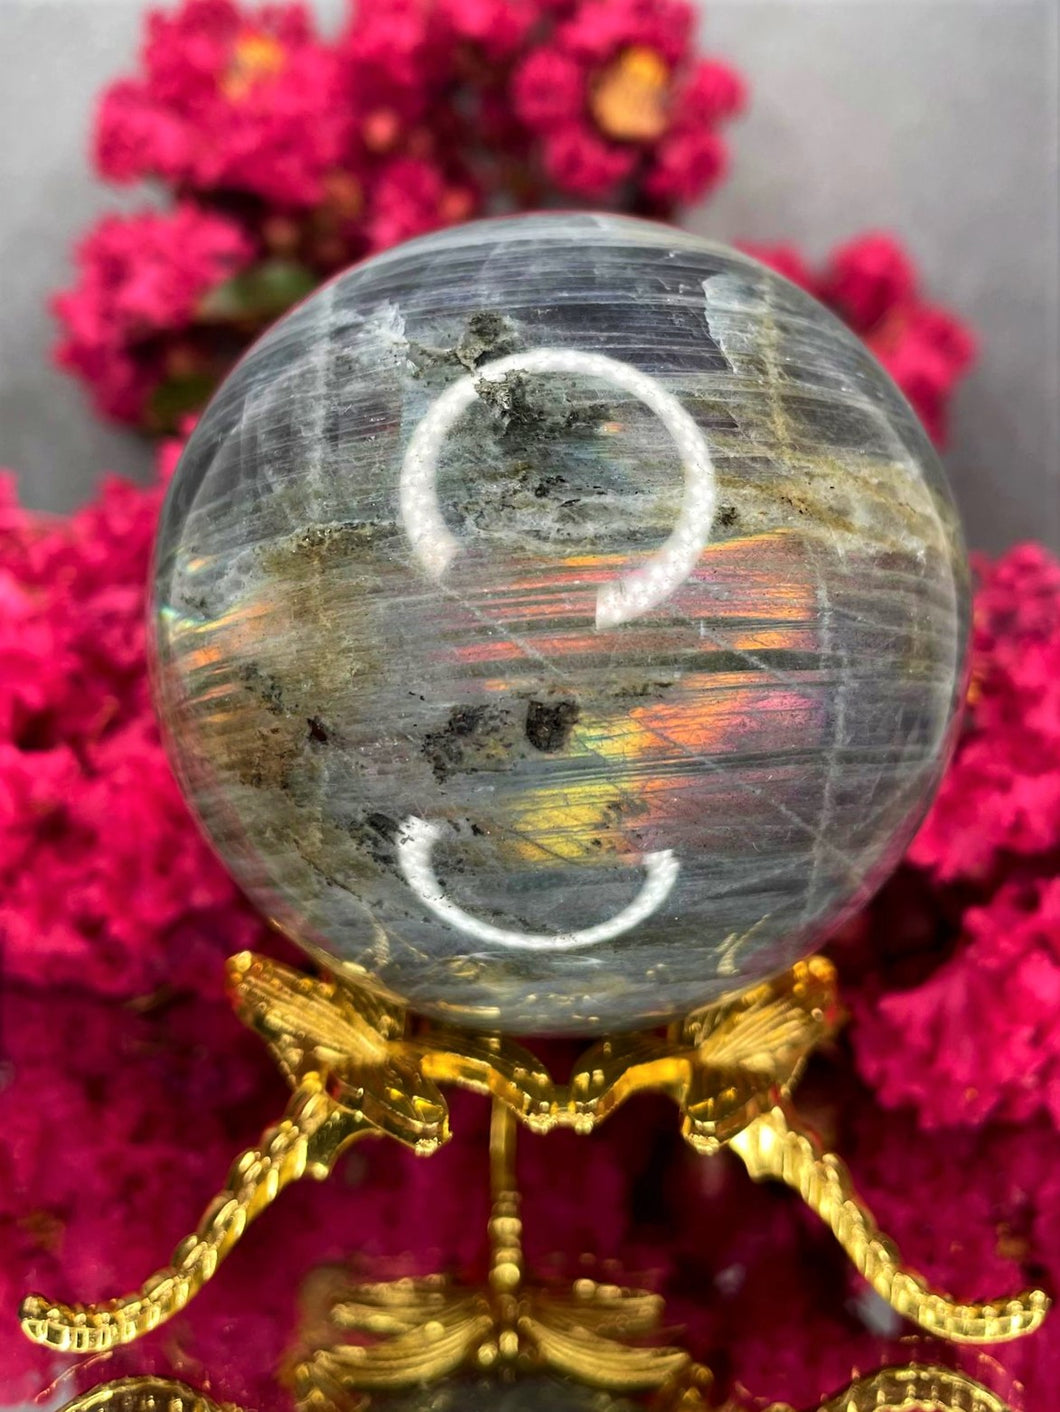 Breathtaking Labradorite Crystal Sphere With Flash